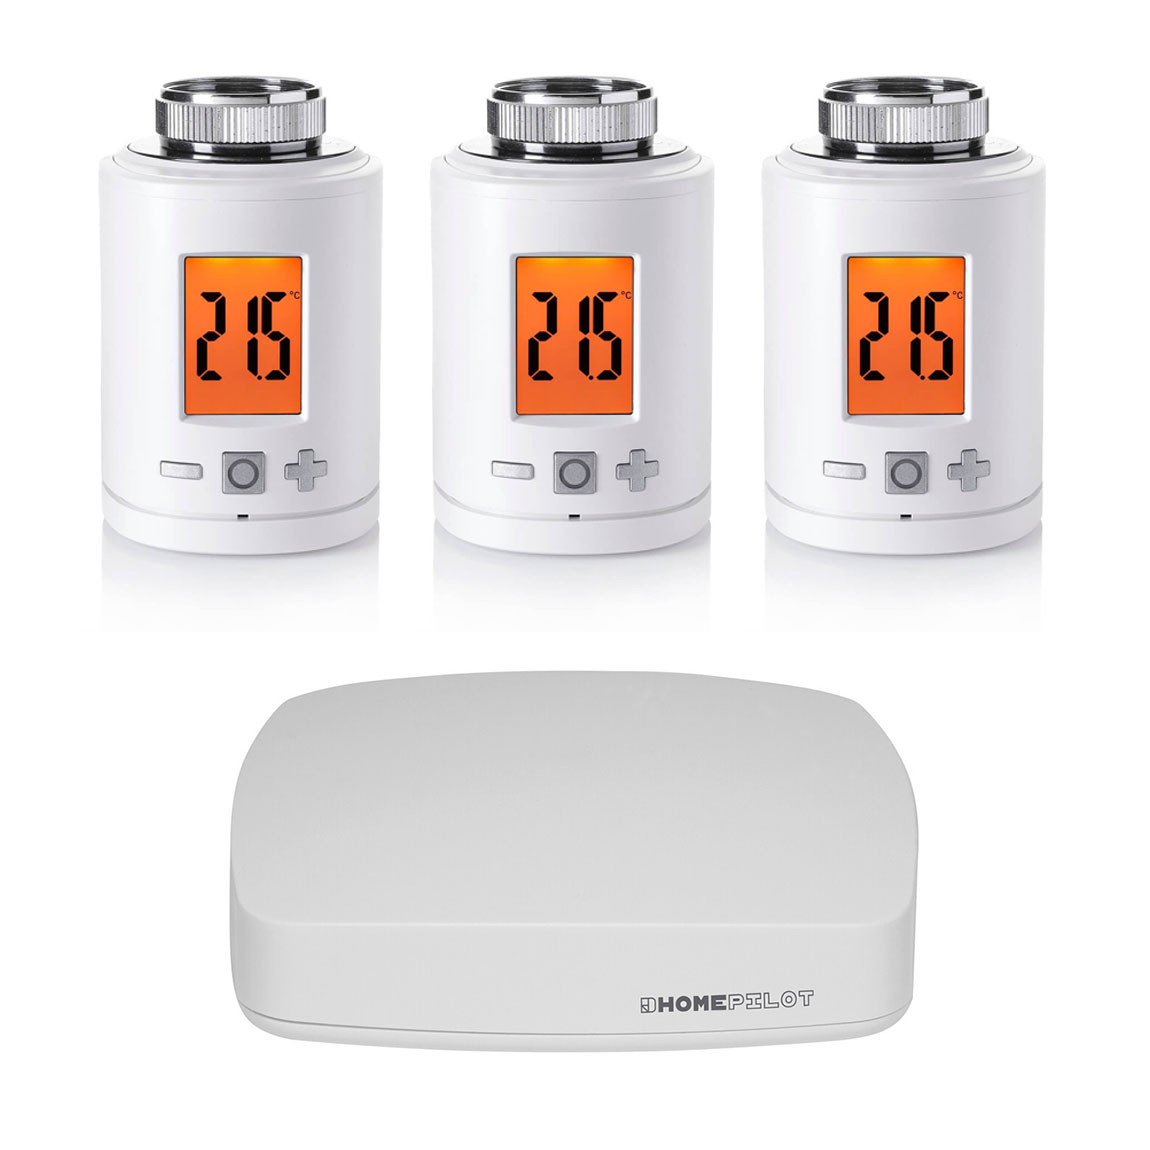 HOMEPILOT Gateway Premium + Heizkörper-Thermostat smart 3er-Set